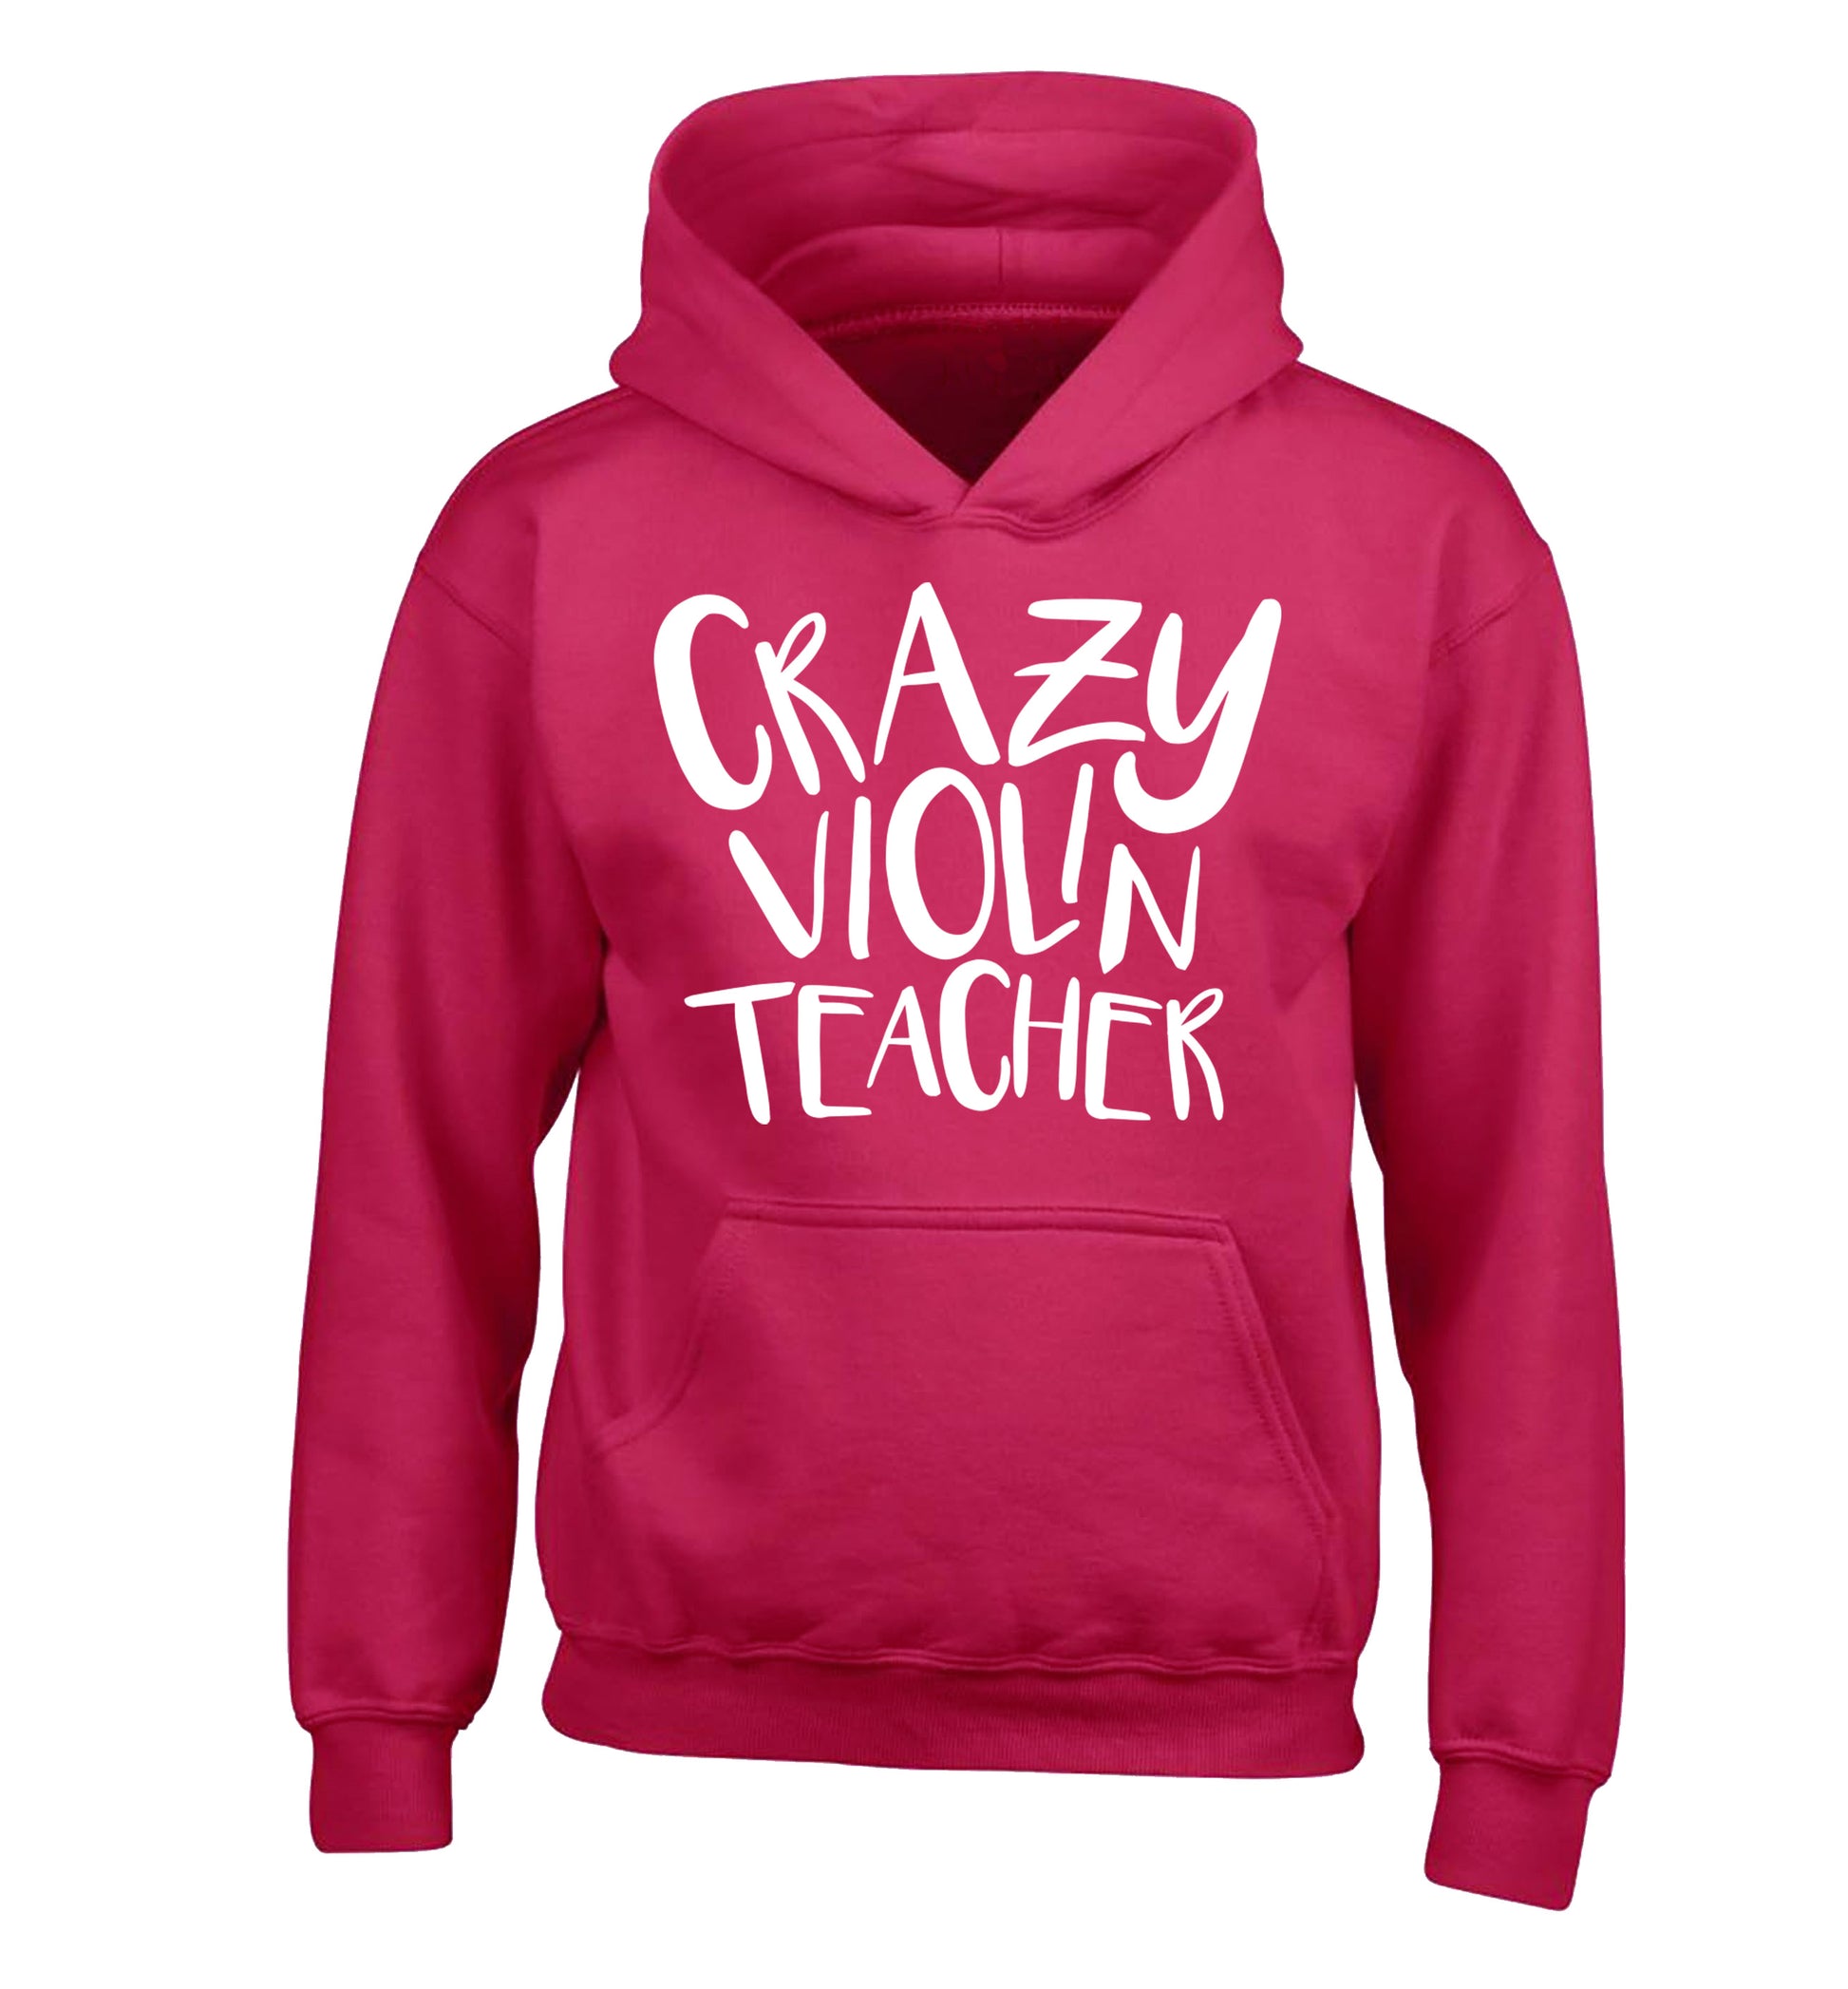 Crazy violin teacher children's pink hoodie 12-13 Years